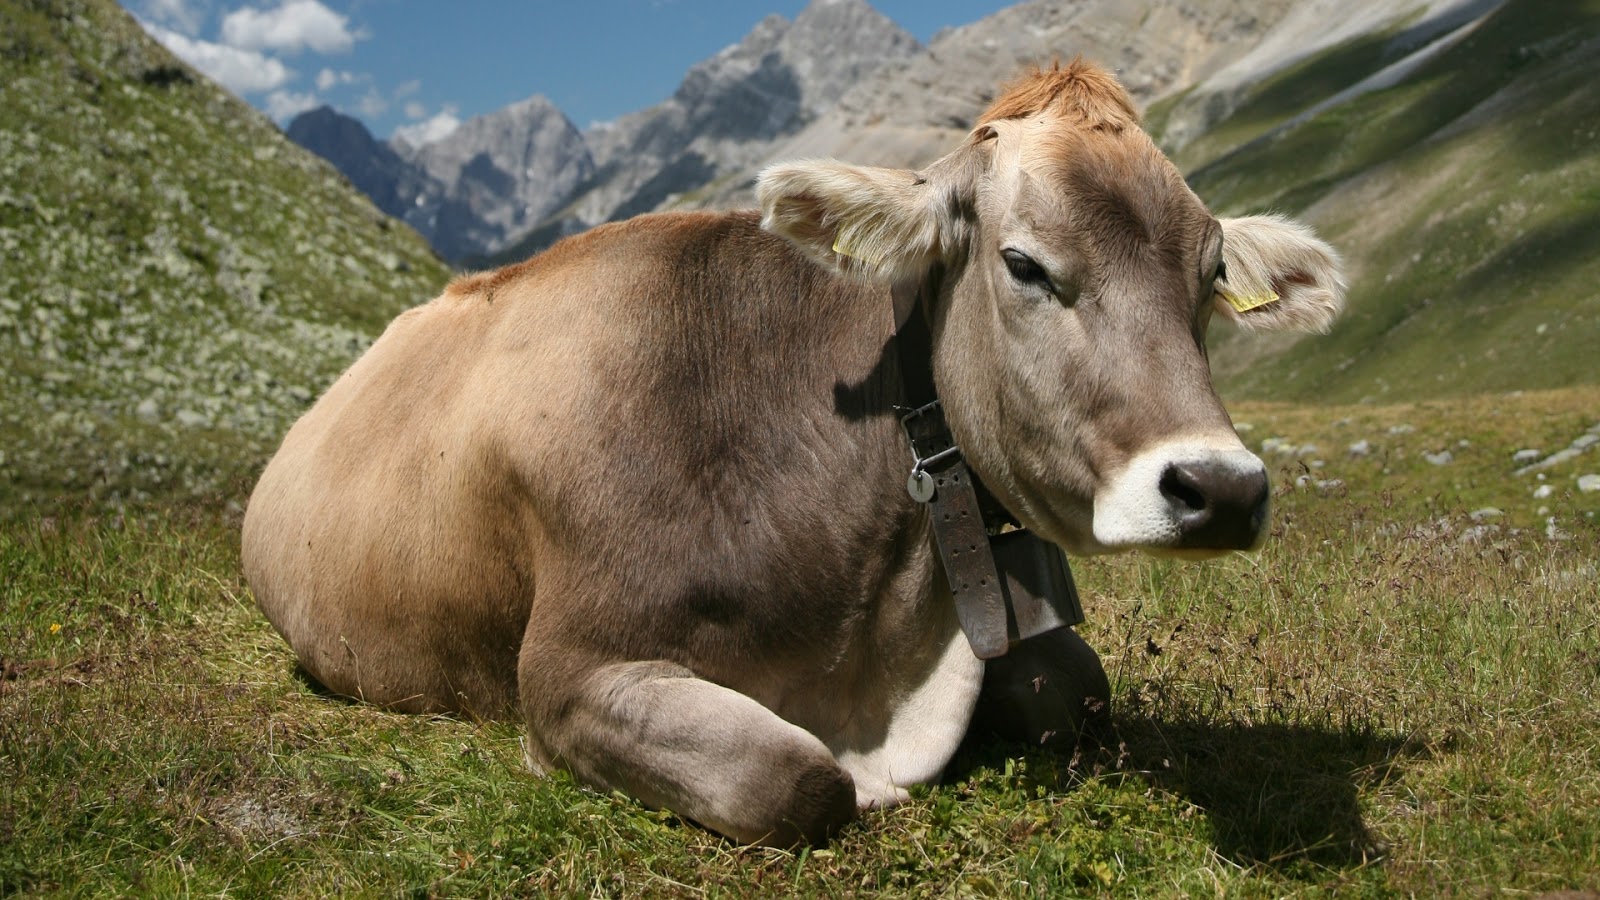 HD Wallpaper Cow